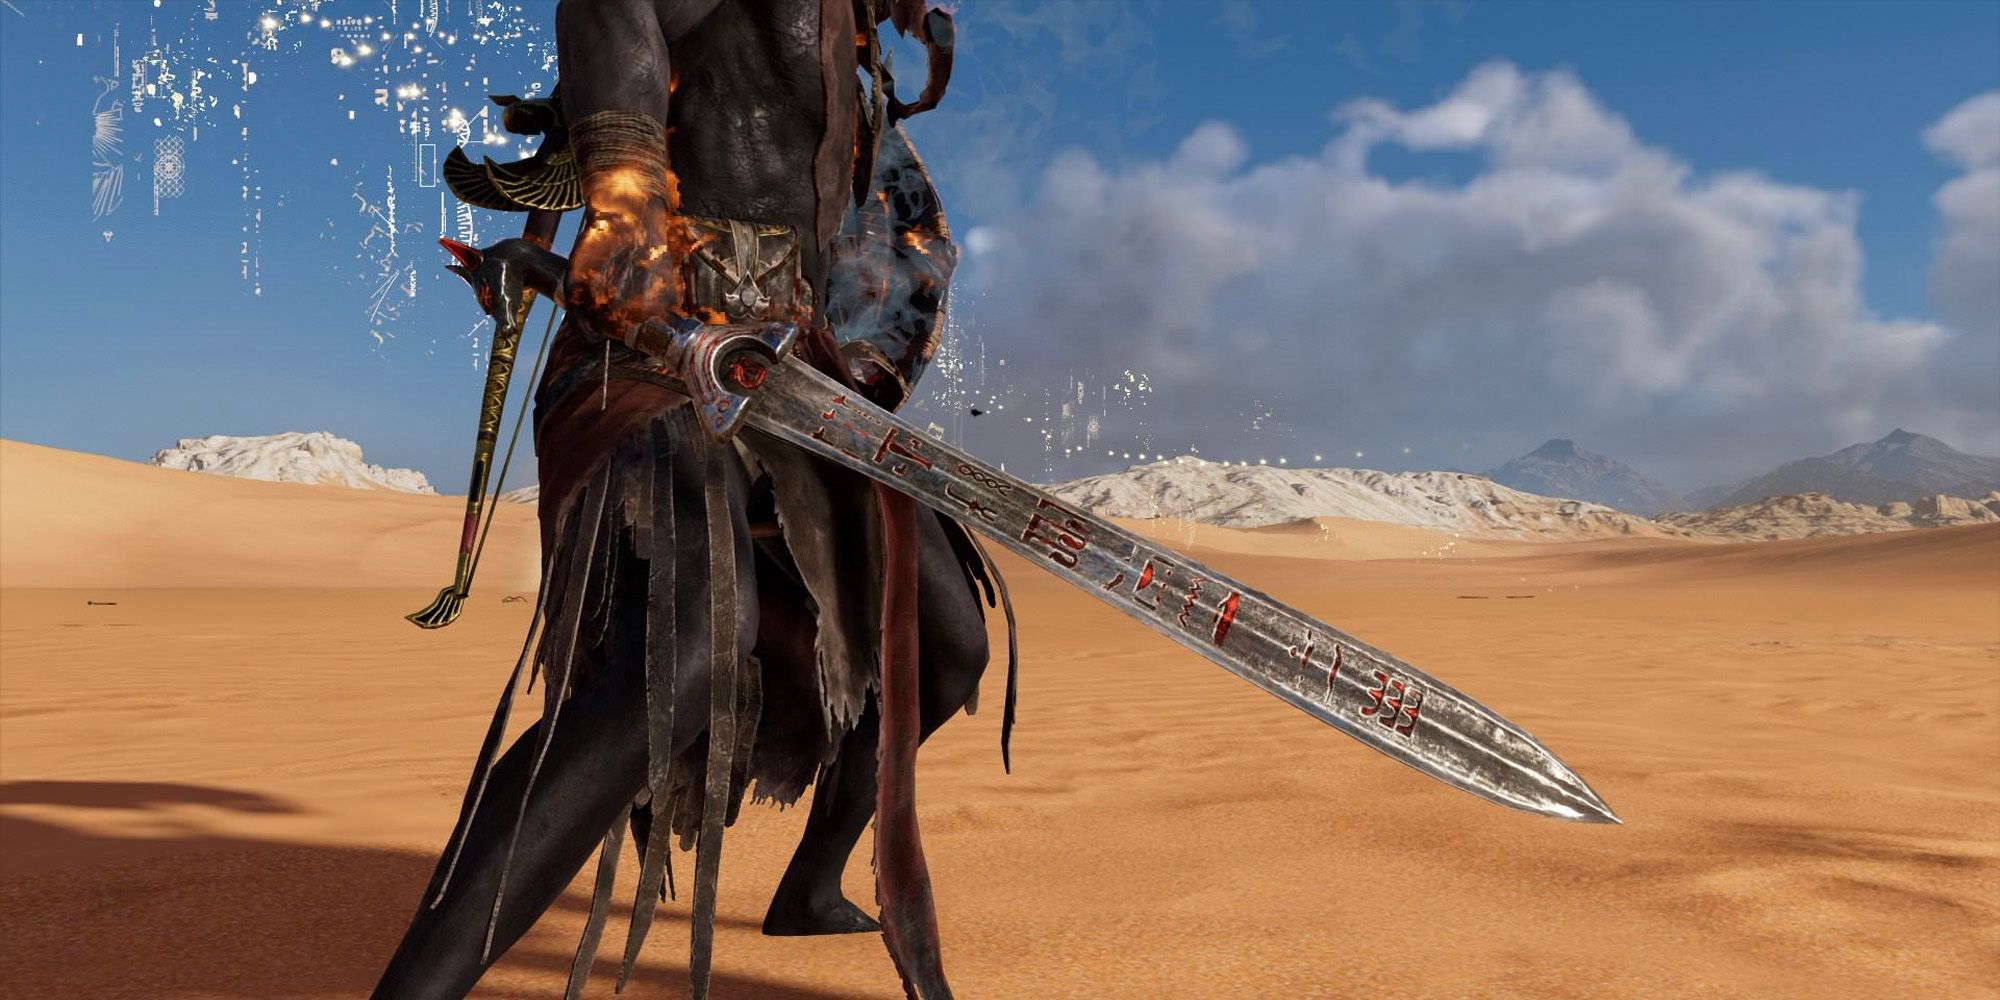 bayek of siwa walking in the desert holding the sword of duat